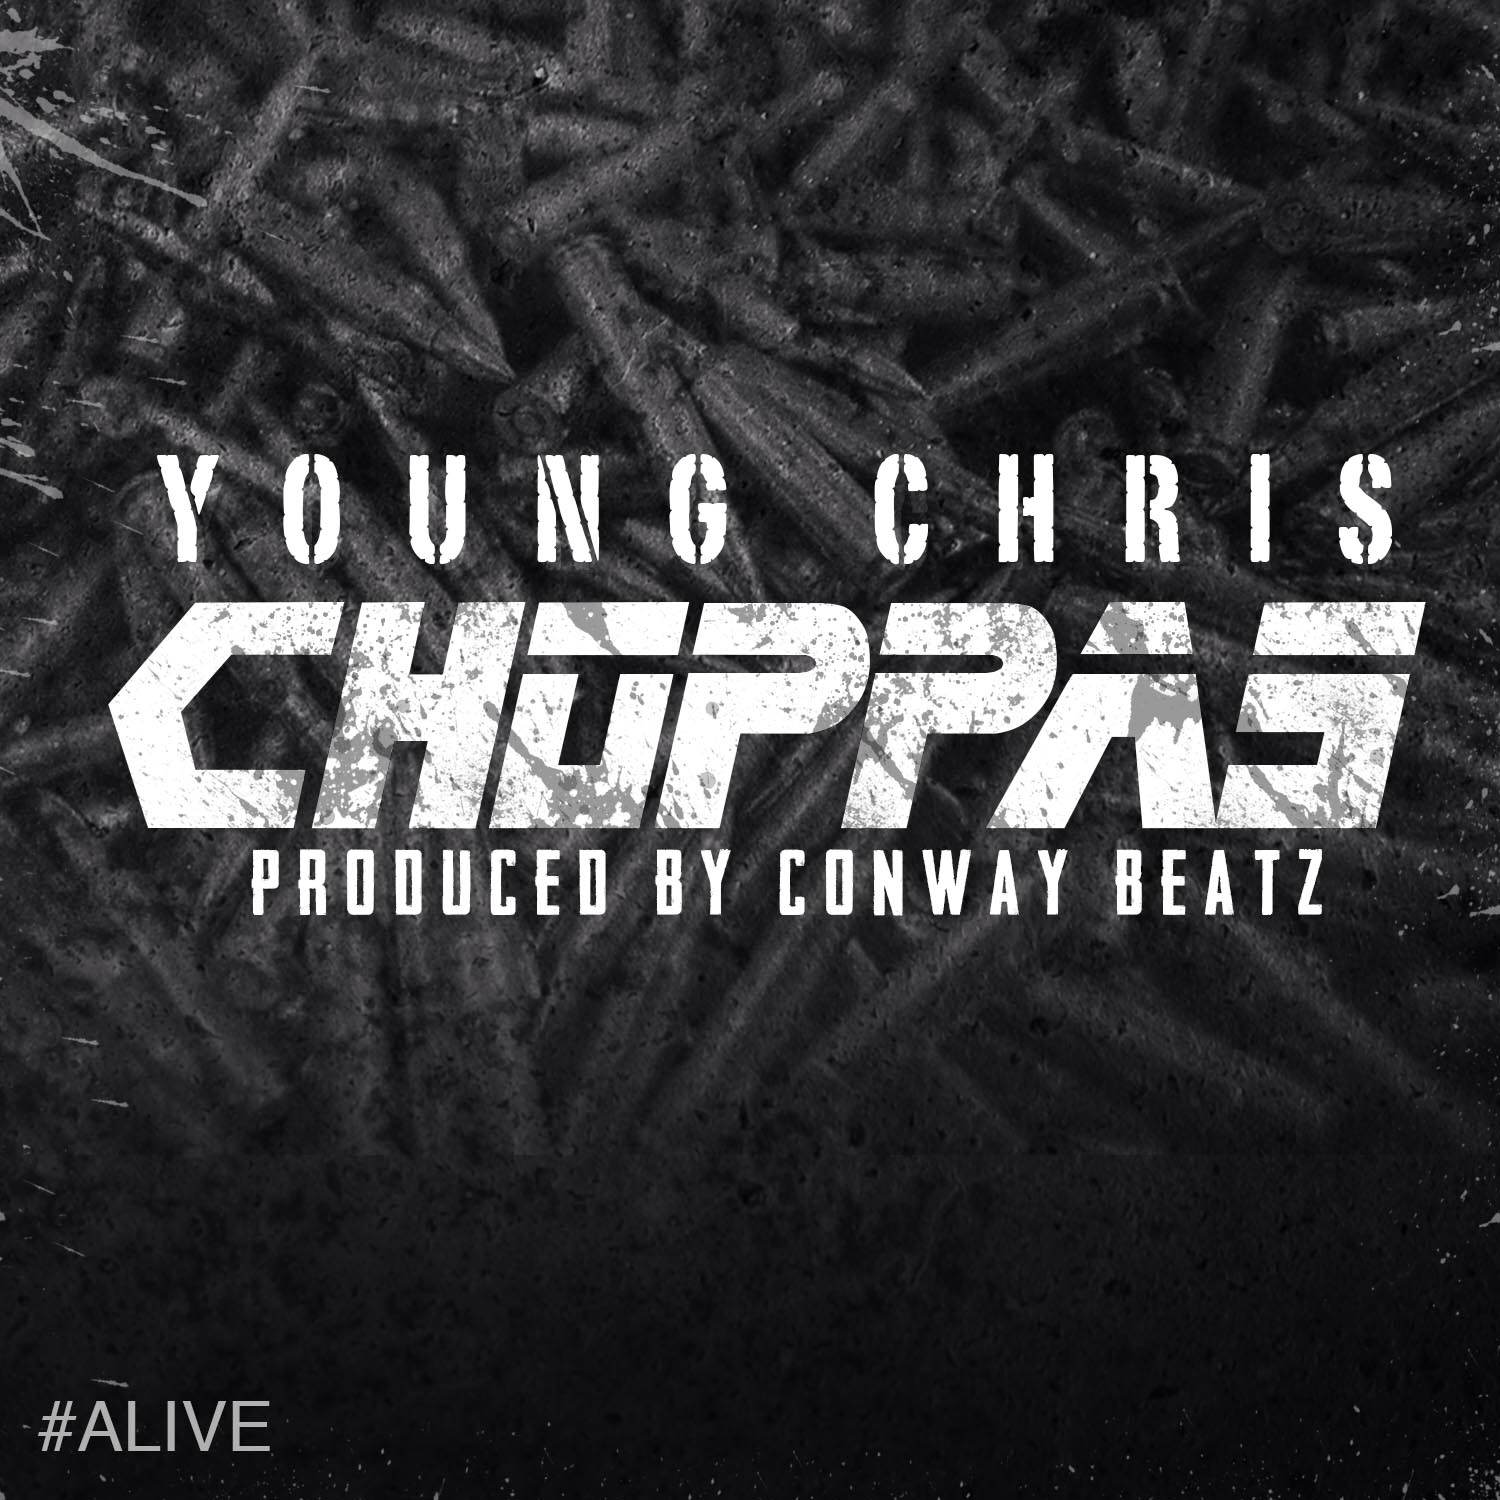 young-chris-choppas-prod-conway-beatz-HHS1987-2013 Young Chris - Choppas (Prod by Conway Beatz)  